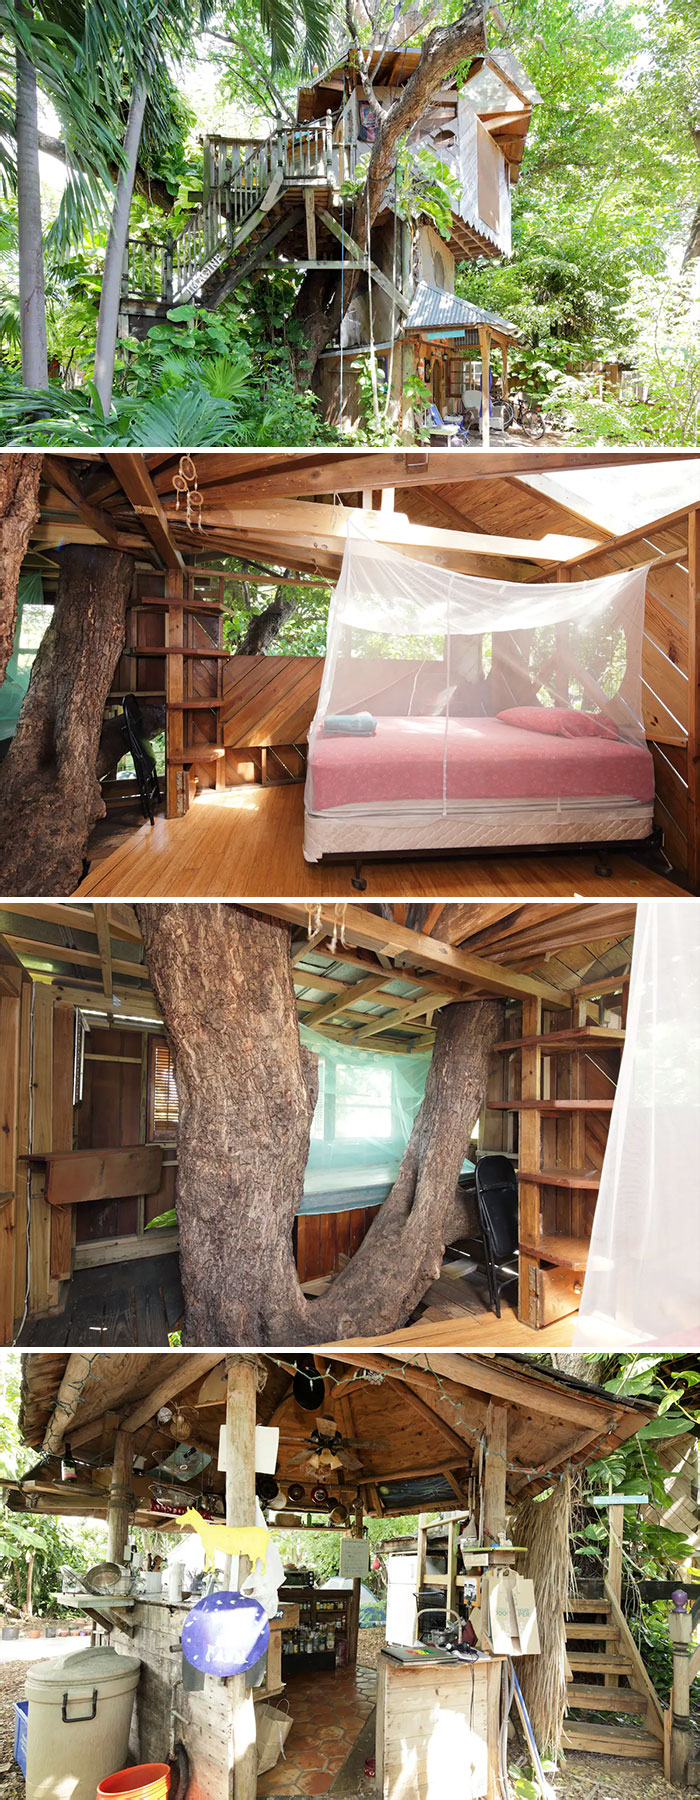 Treehouse Canopy Room: Permaculture Farm. Miami, Florida, United States